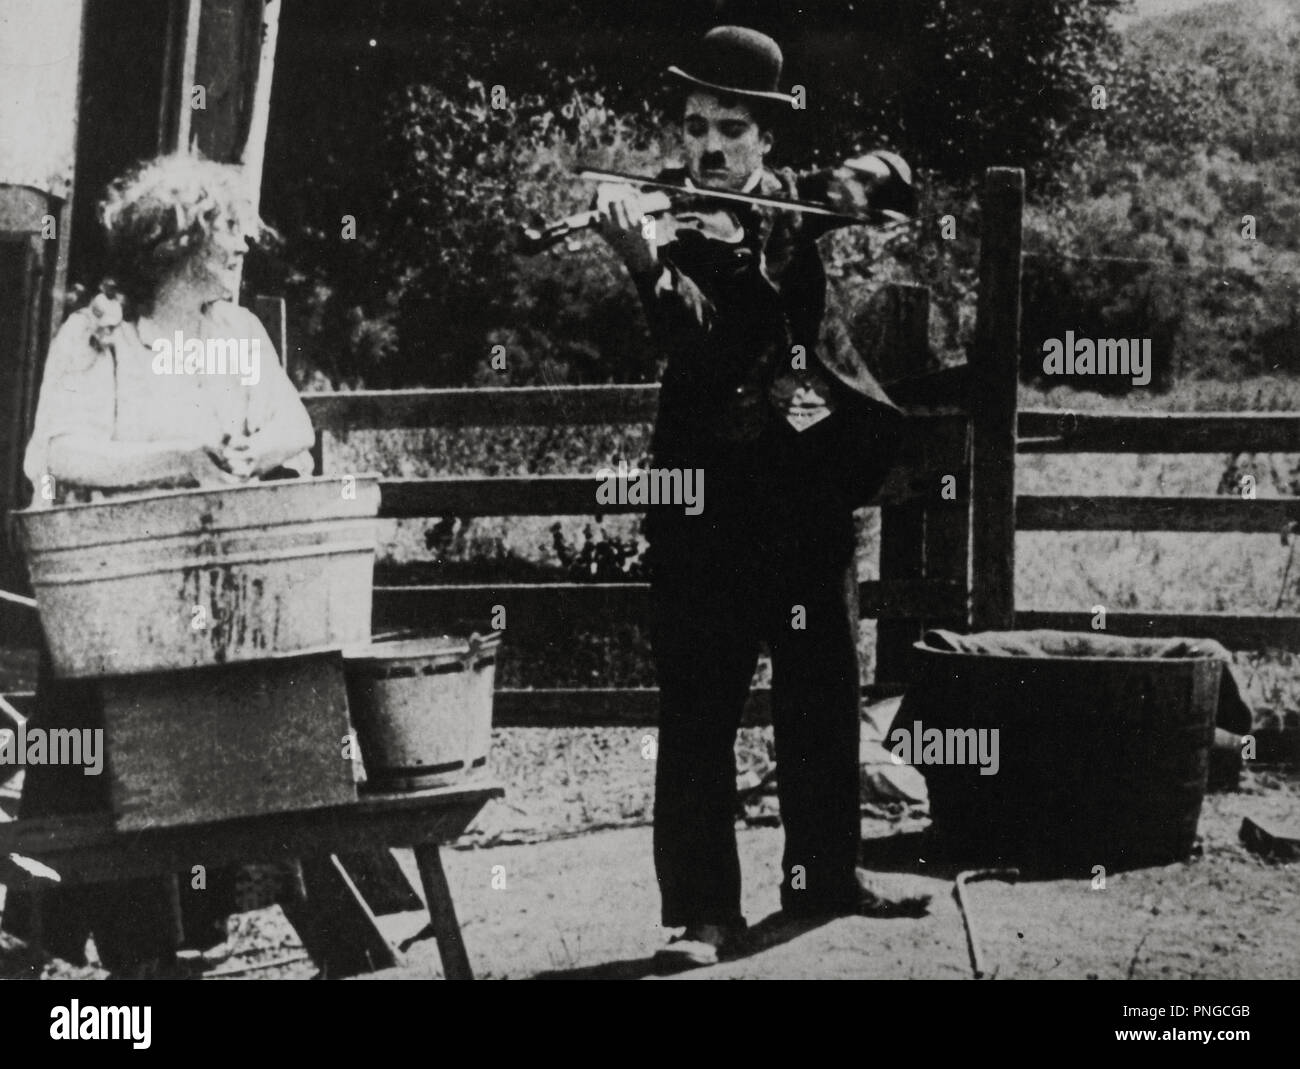 Original film title: THE VAGABOND. English title: THE VAGABOND. Year: 1916.  Director: CHARLIE CHAPLIN. Stars: CHARLIE CHAPLIN. Credit: MUTUAL FILM  COMPANY / Album Stock Photo - Alamy